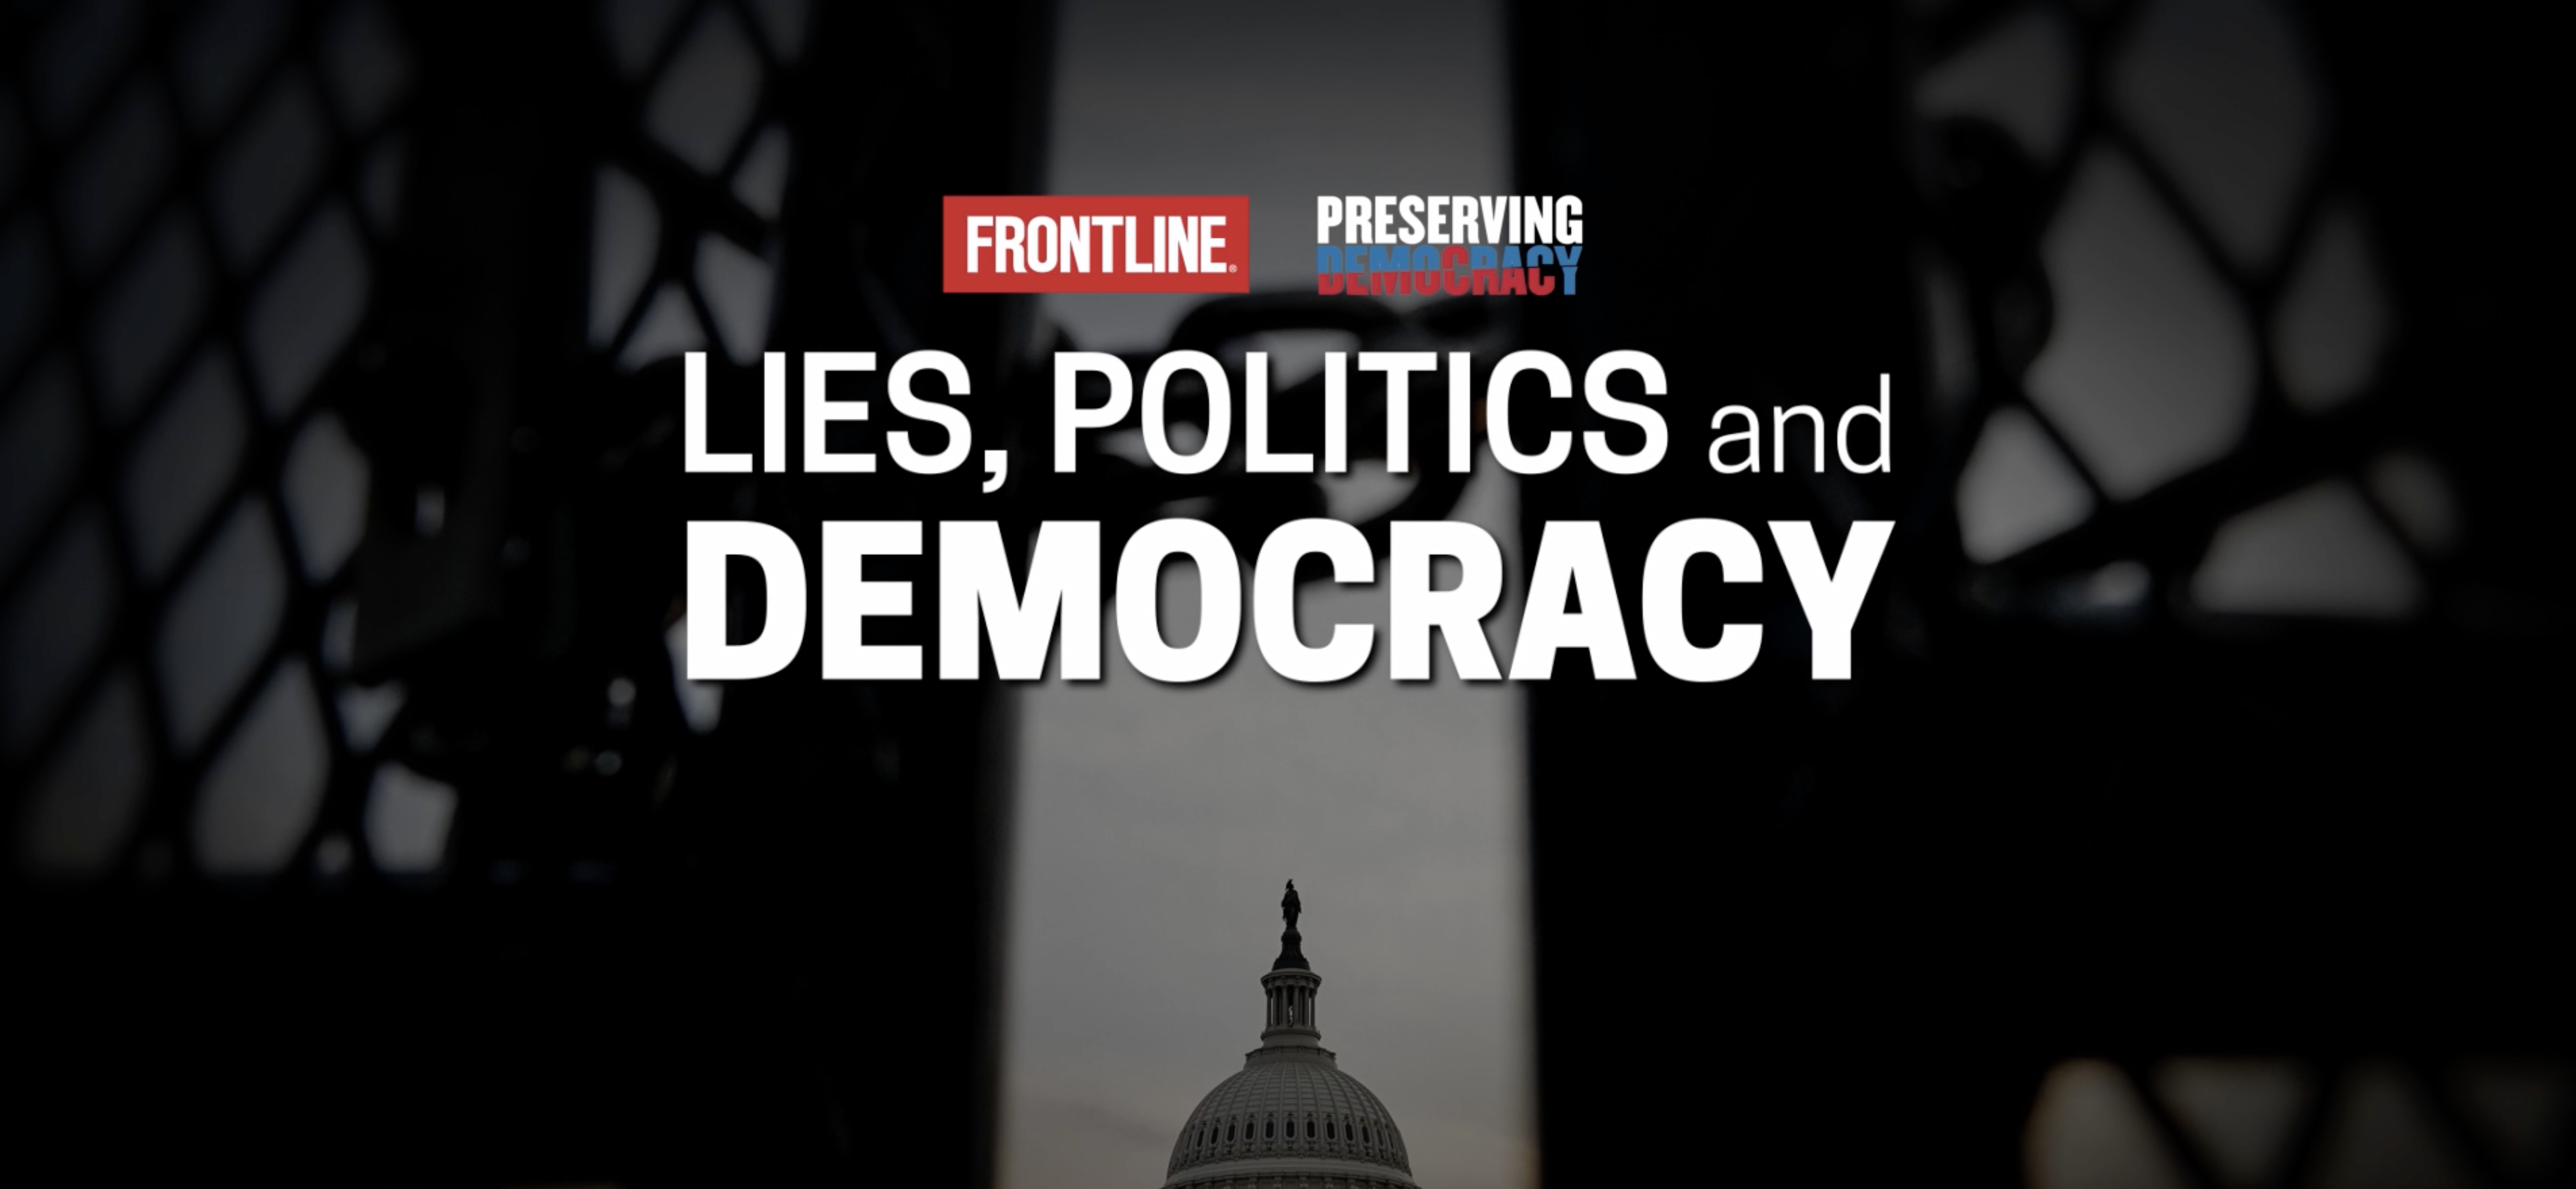 FRONTLINE <br/>Lies, Politics and Democracy